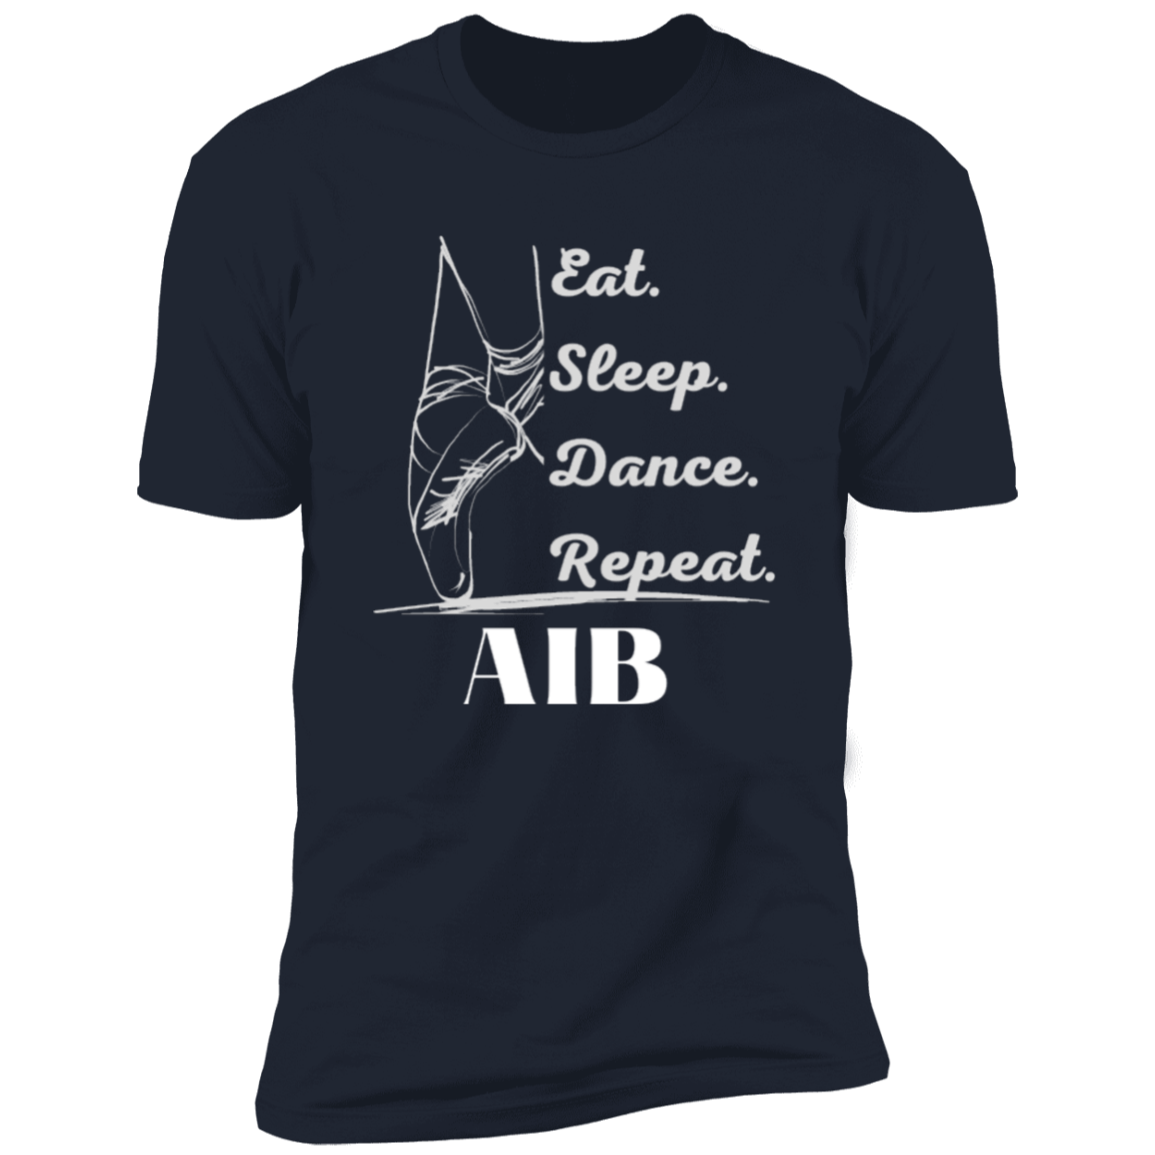 Eat. Sleep. Dance. Repeat. Men's Short Sleeve T-Shirt